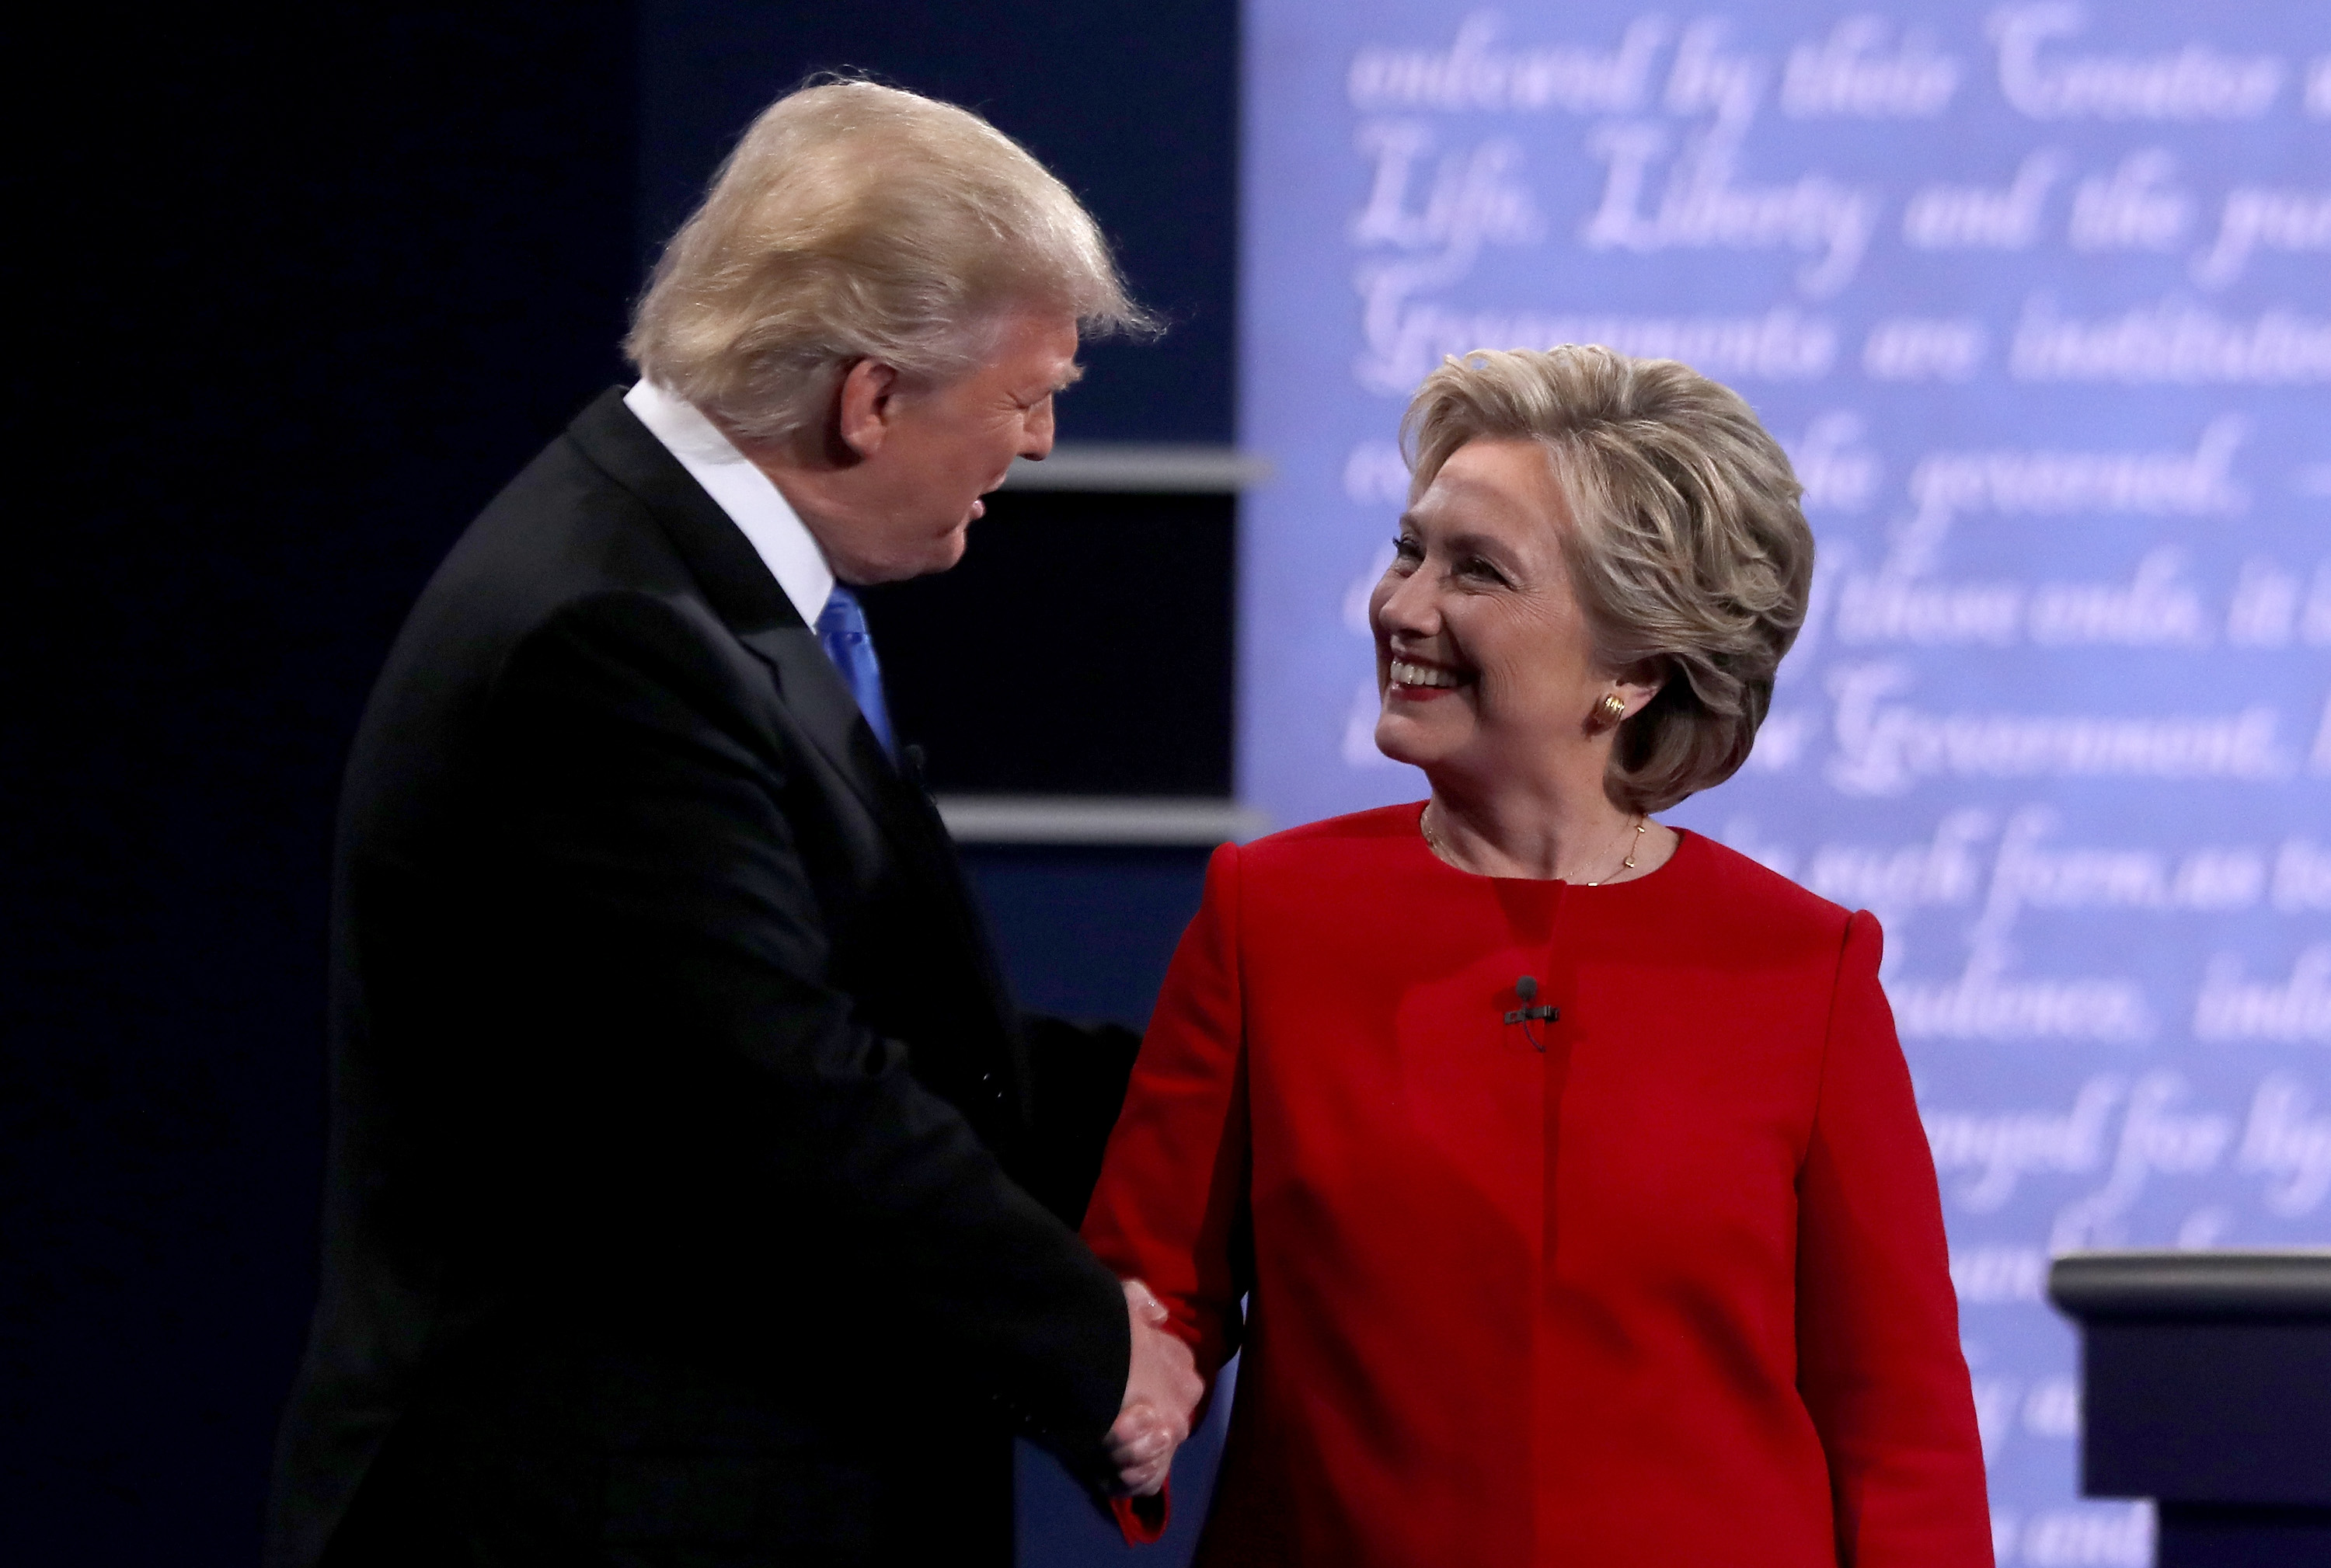 Donald Trump and Hillary Clinton shake hands